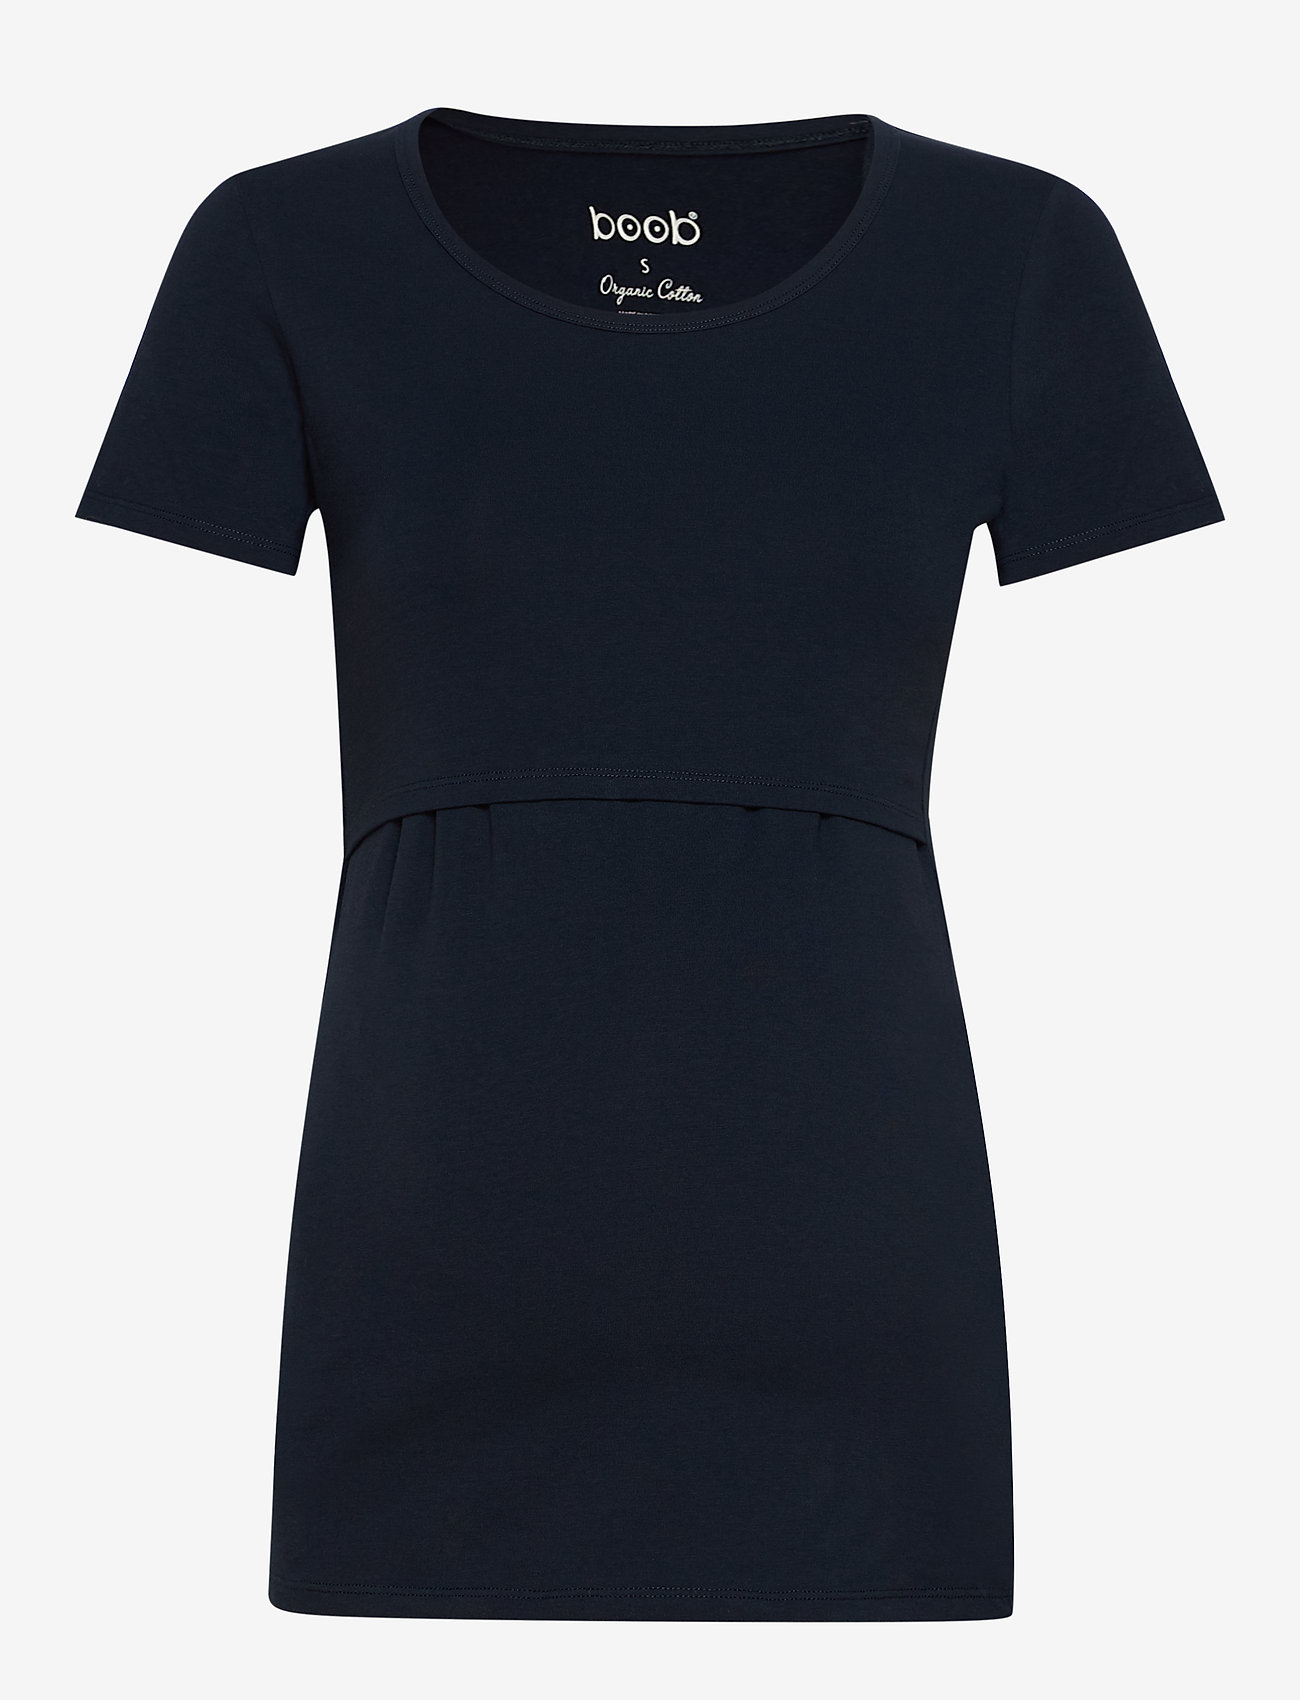 Boob - Classic s/s top - t-shirt & tops - midnight blue - 1